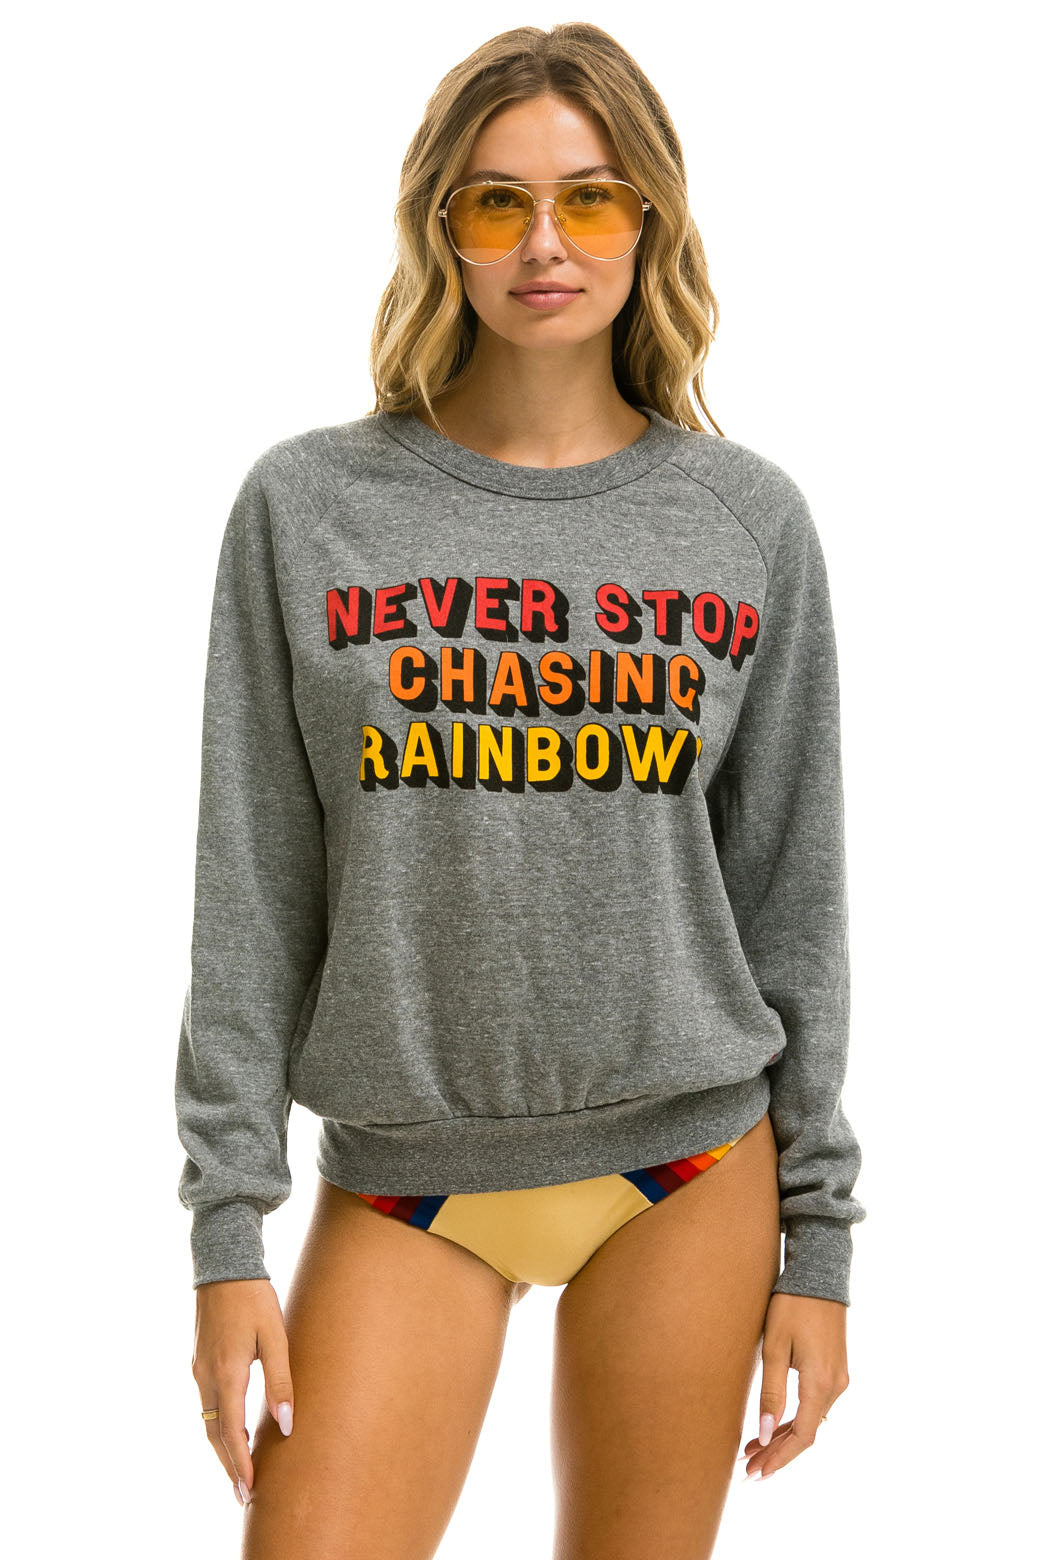 NEVER STOP CHASING RAINBOWS CREW SWEATSHIRT - HEATHER GREY Sweatshirt Aviator Nation 